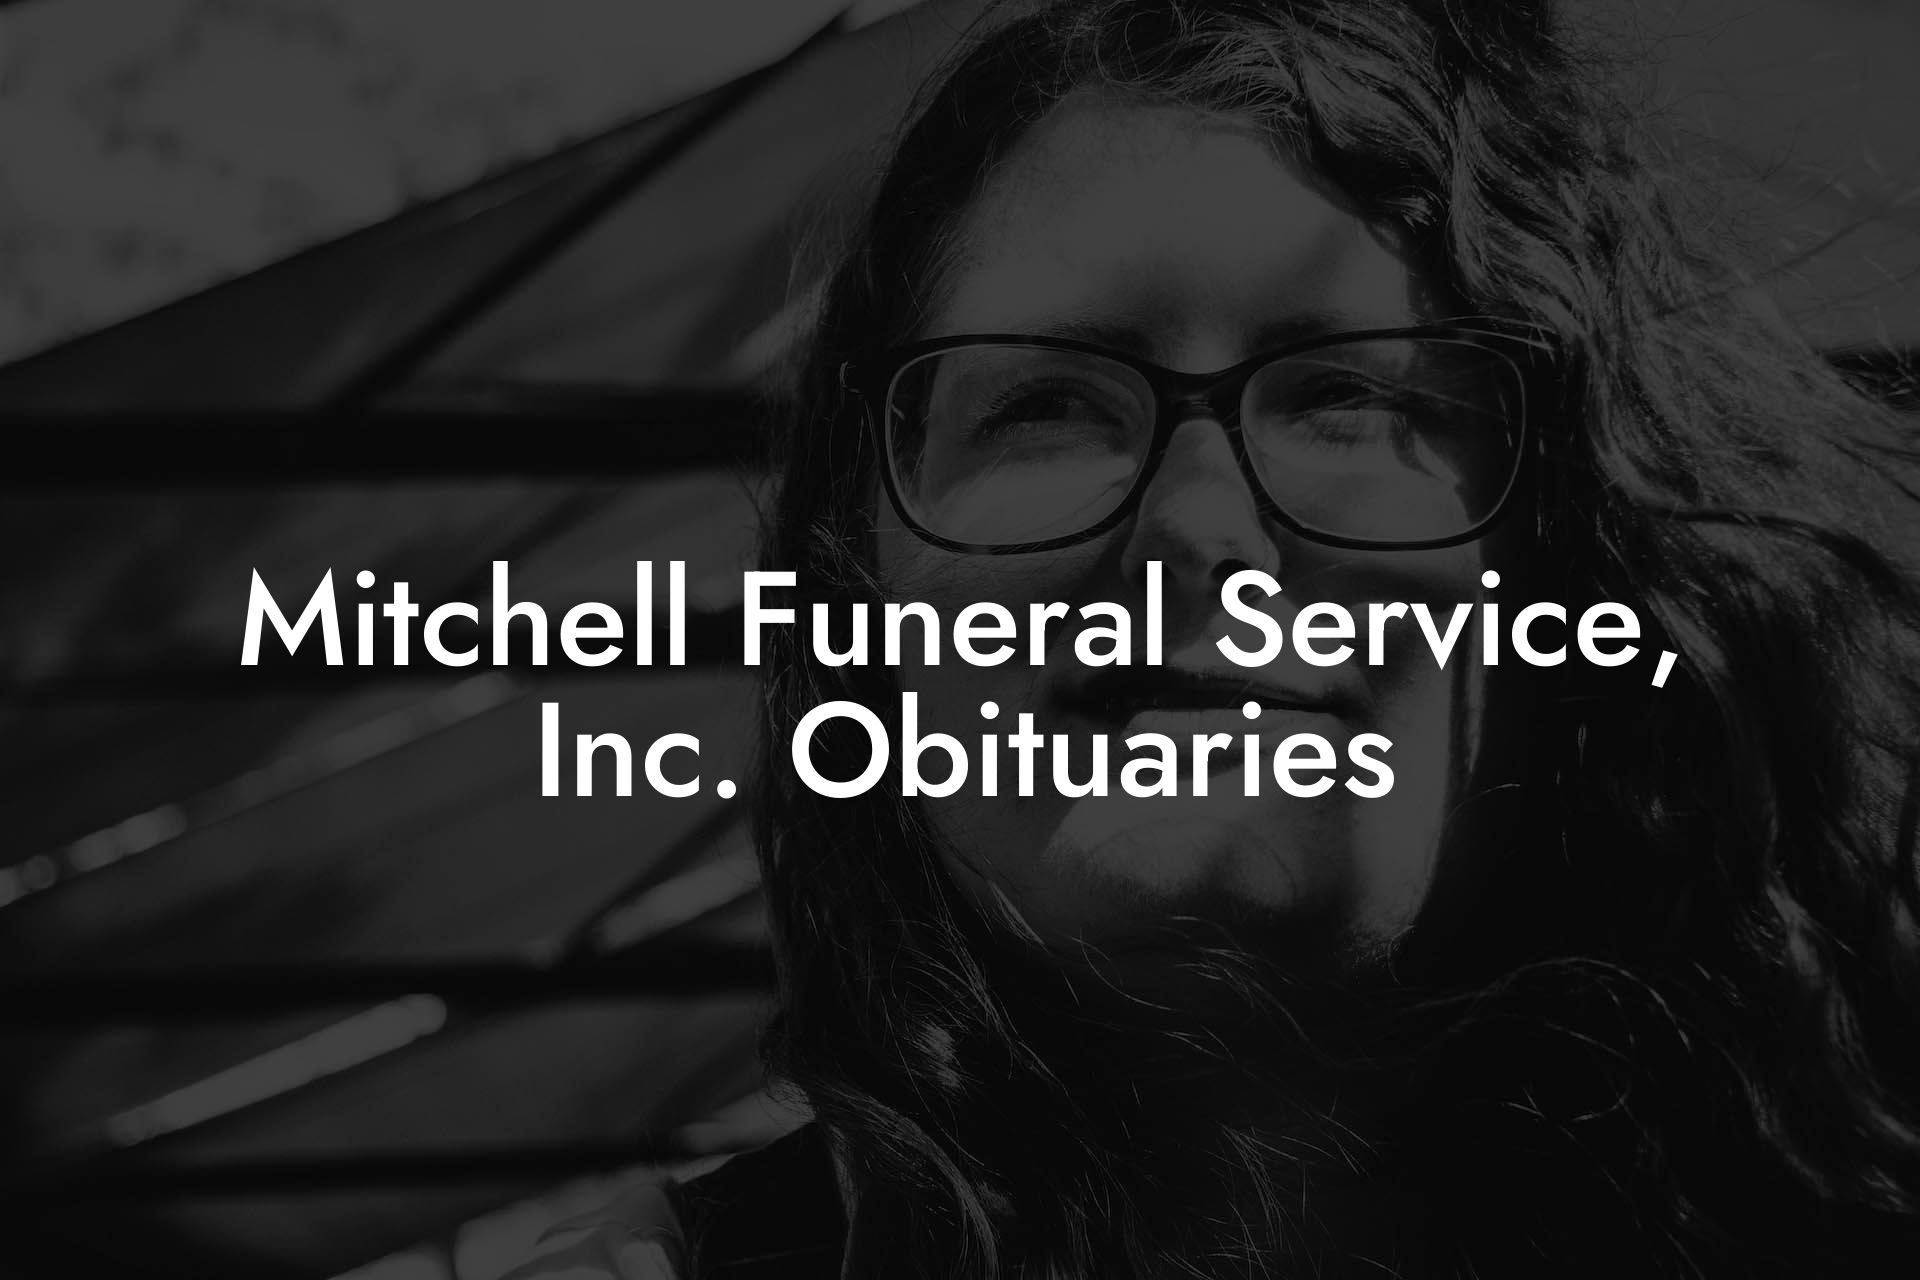 Mitchell Funeral Service, Inc. Obituaries